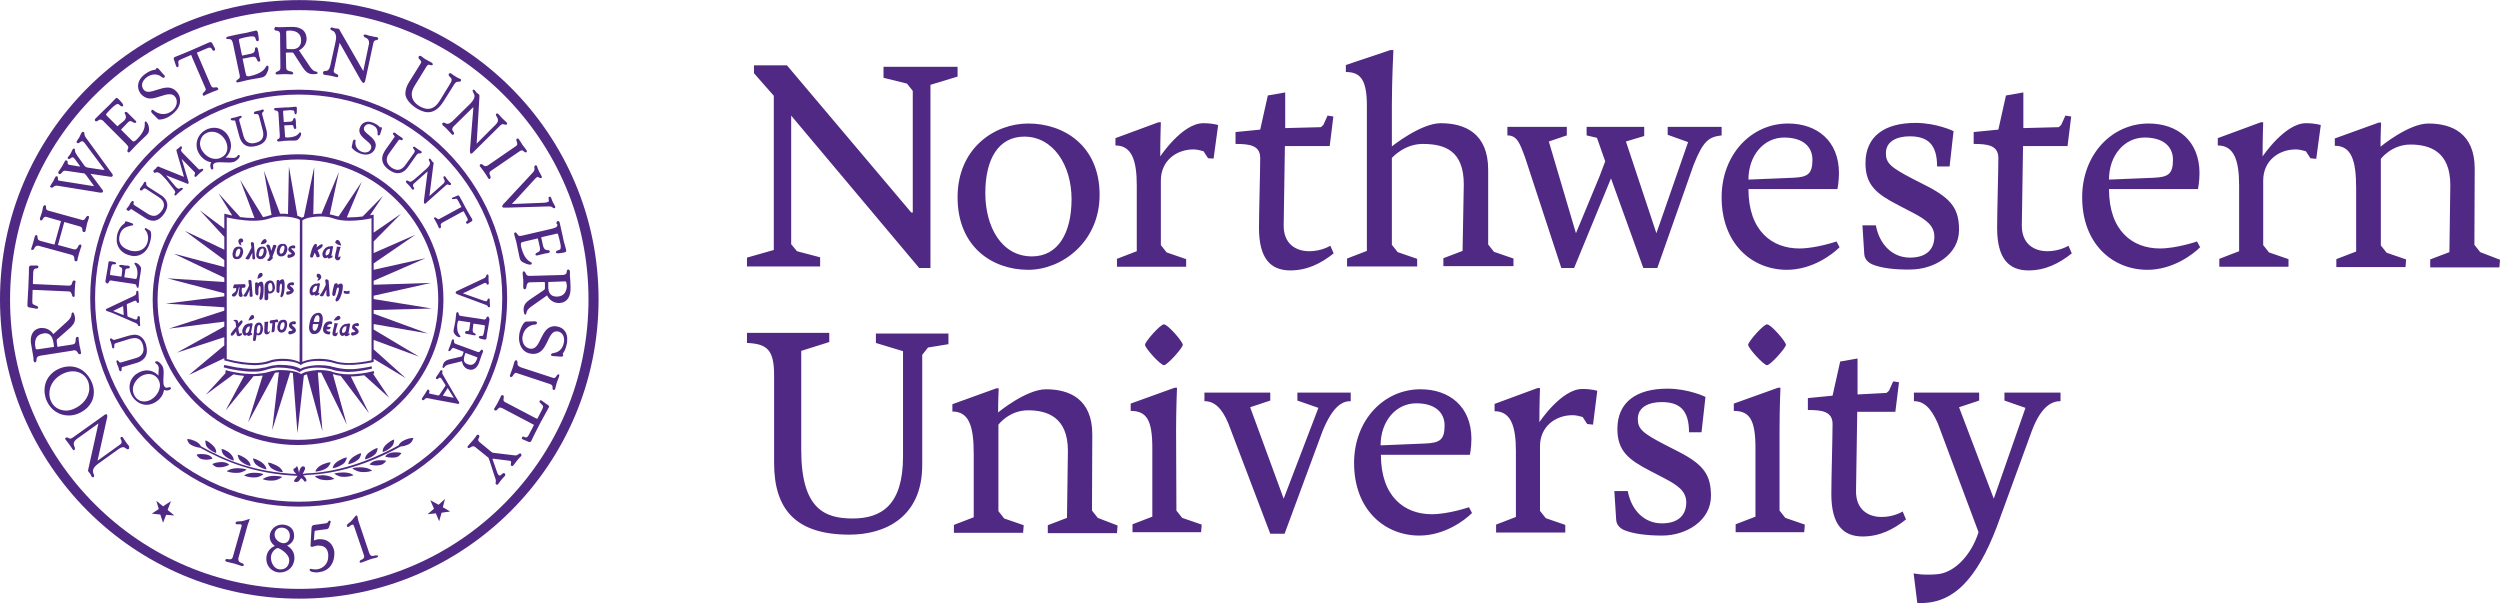 northwestern-university-logo-vector.png